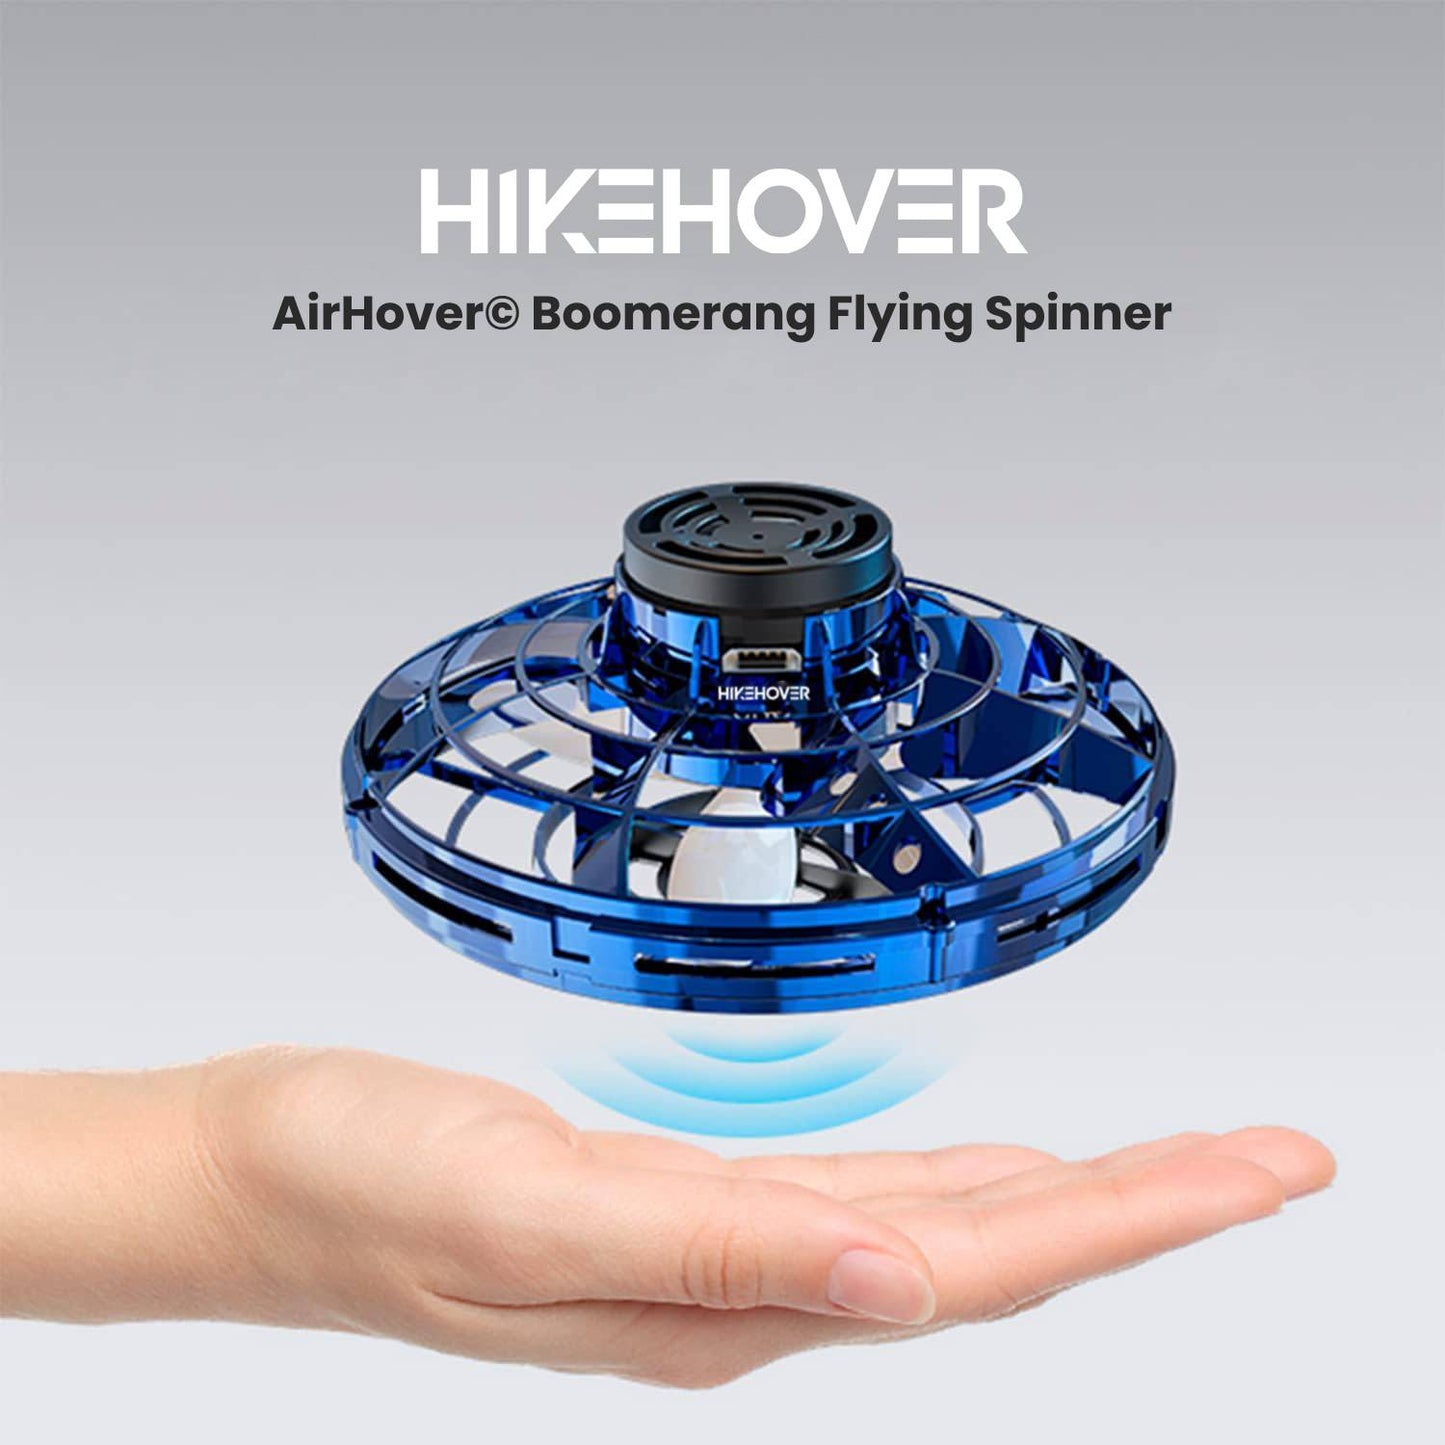 AirHover© Boomerang Flying Spinner